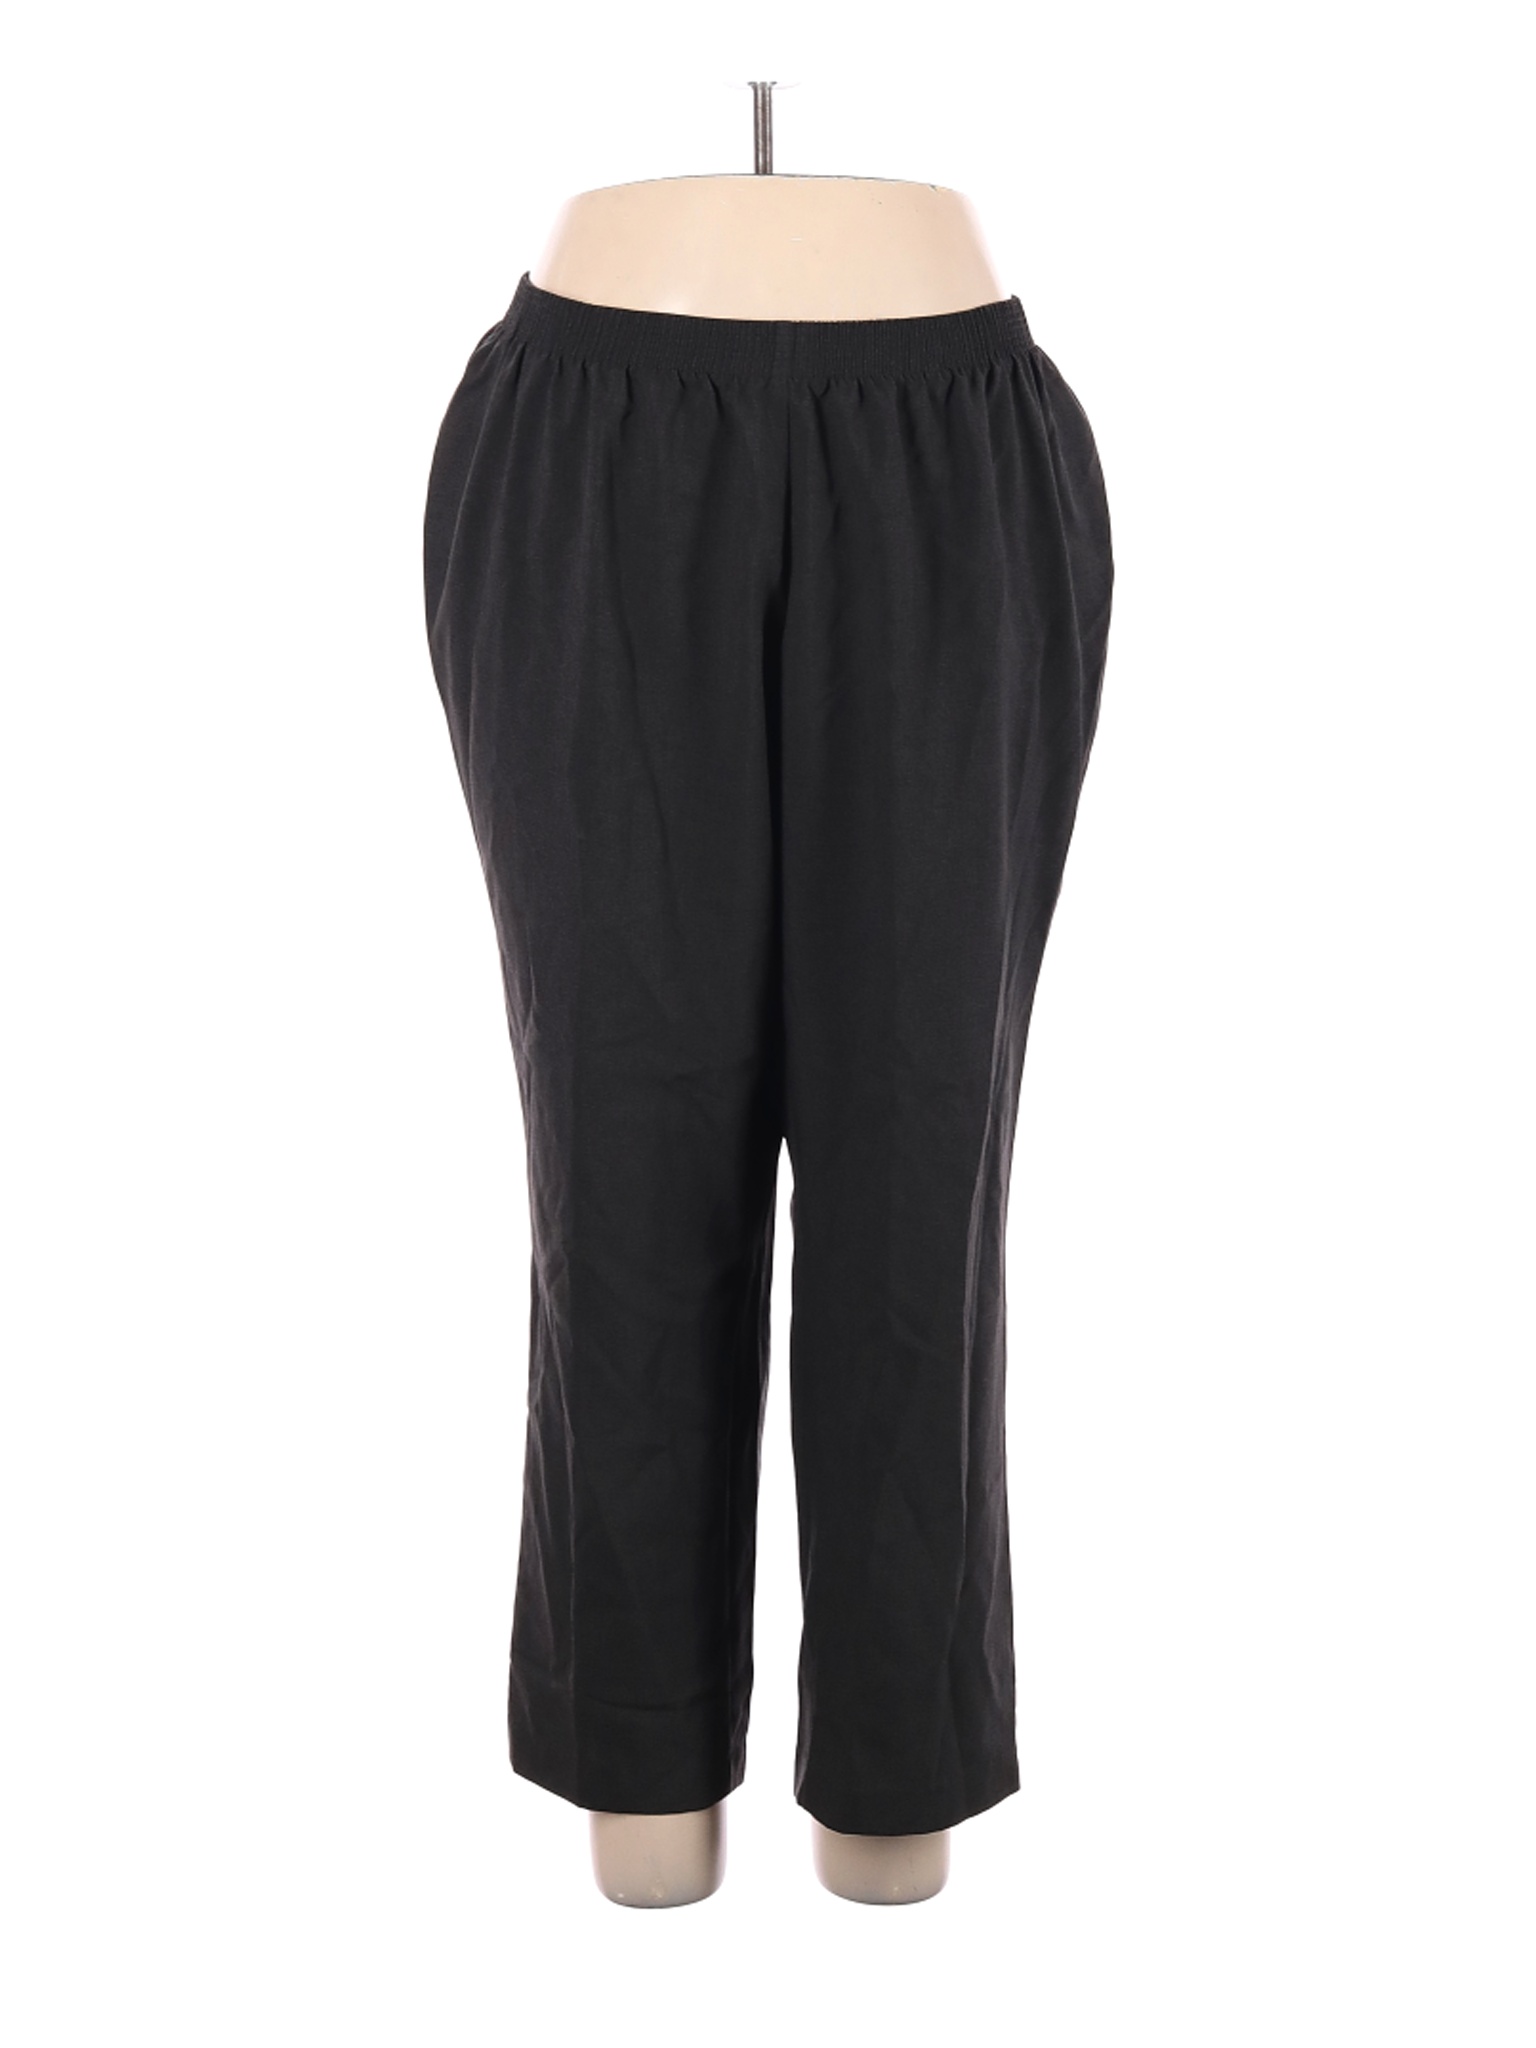 Allison Daley Women Black Casual Pants 24 Plus | eBay